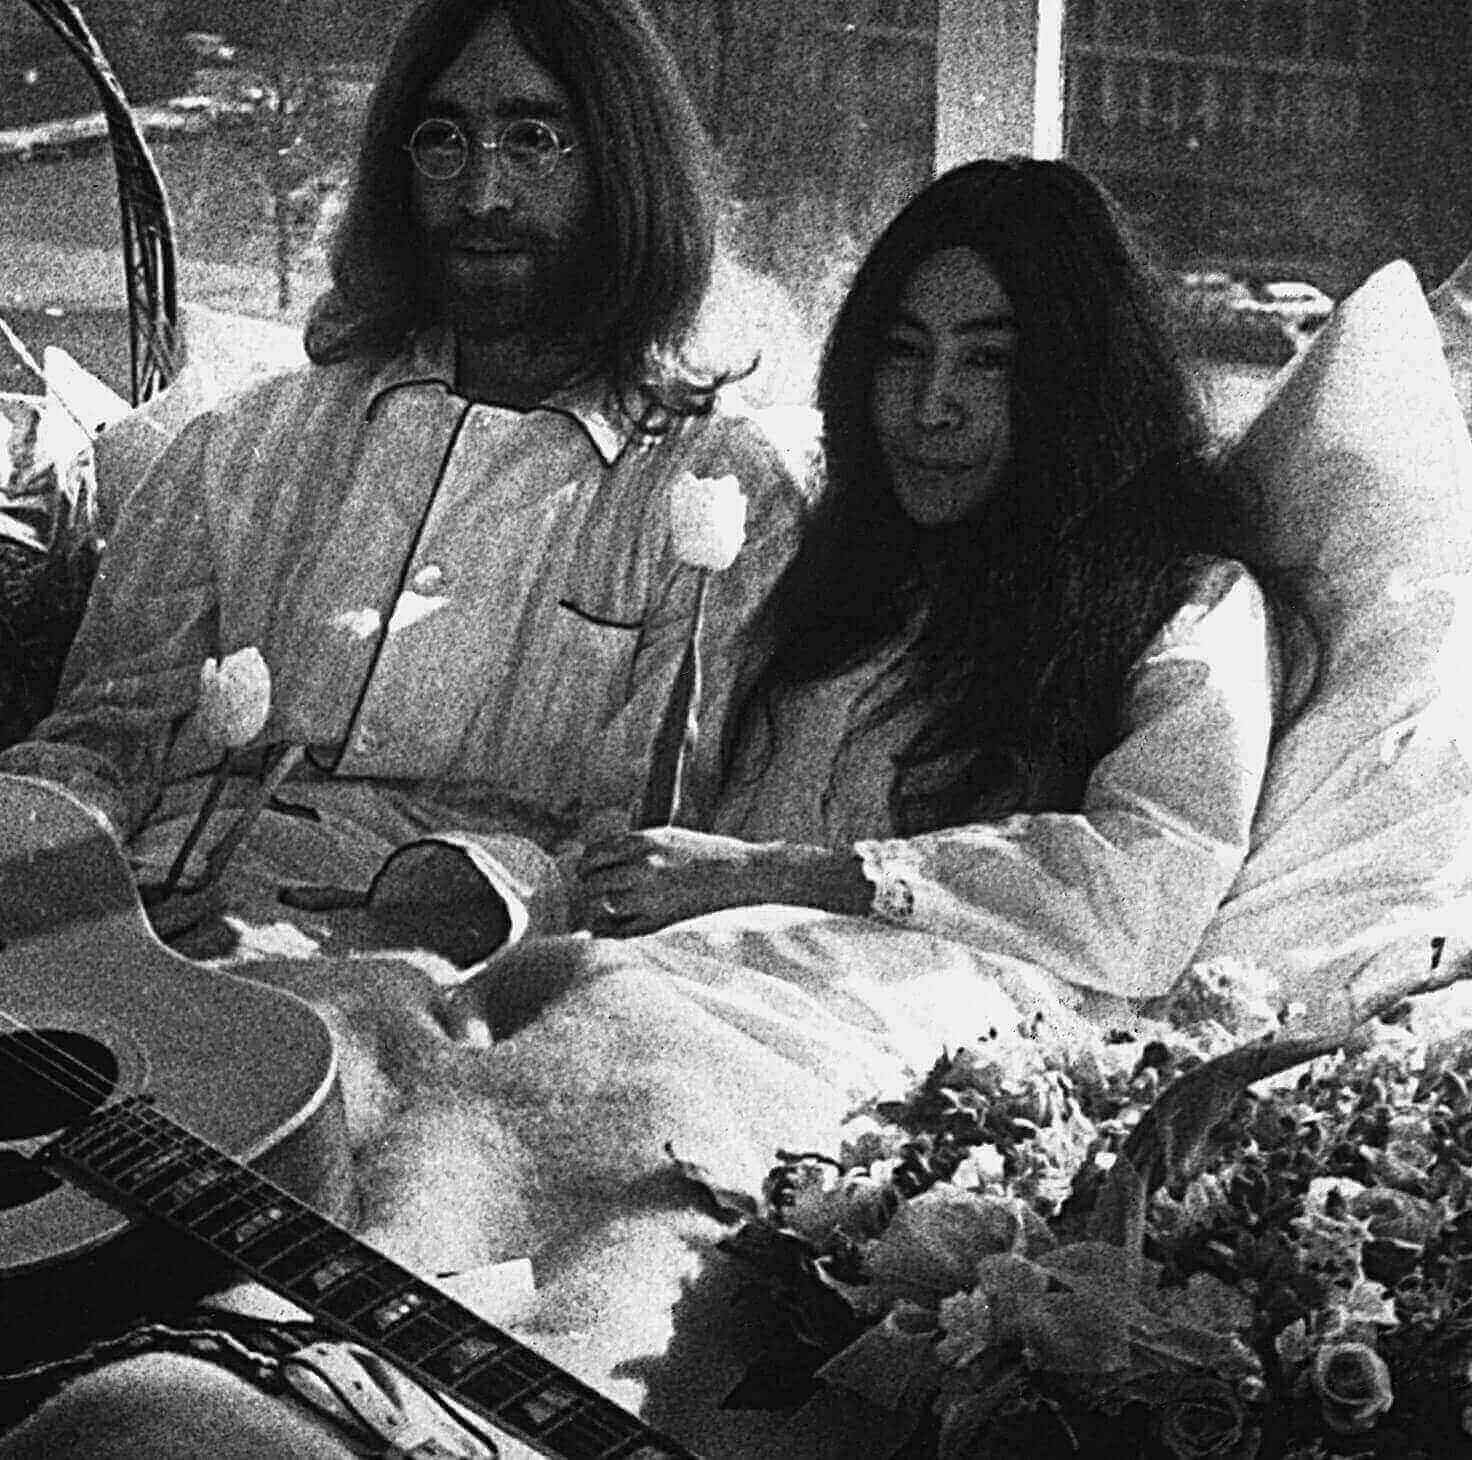 John Lennon and Yoko Ono in bed